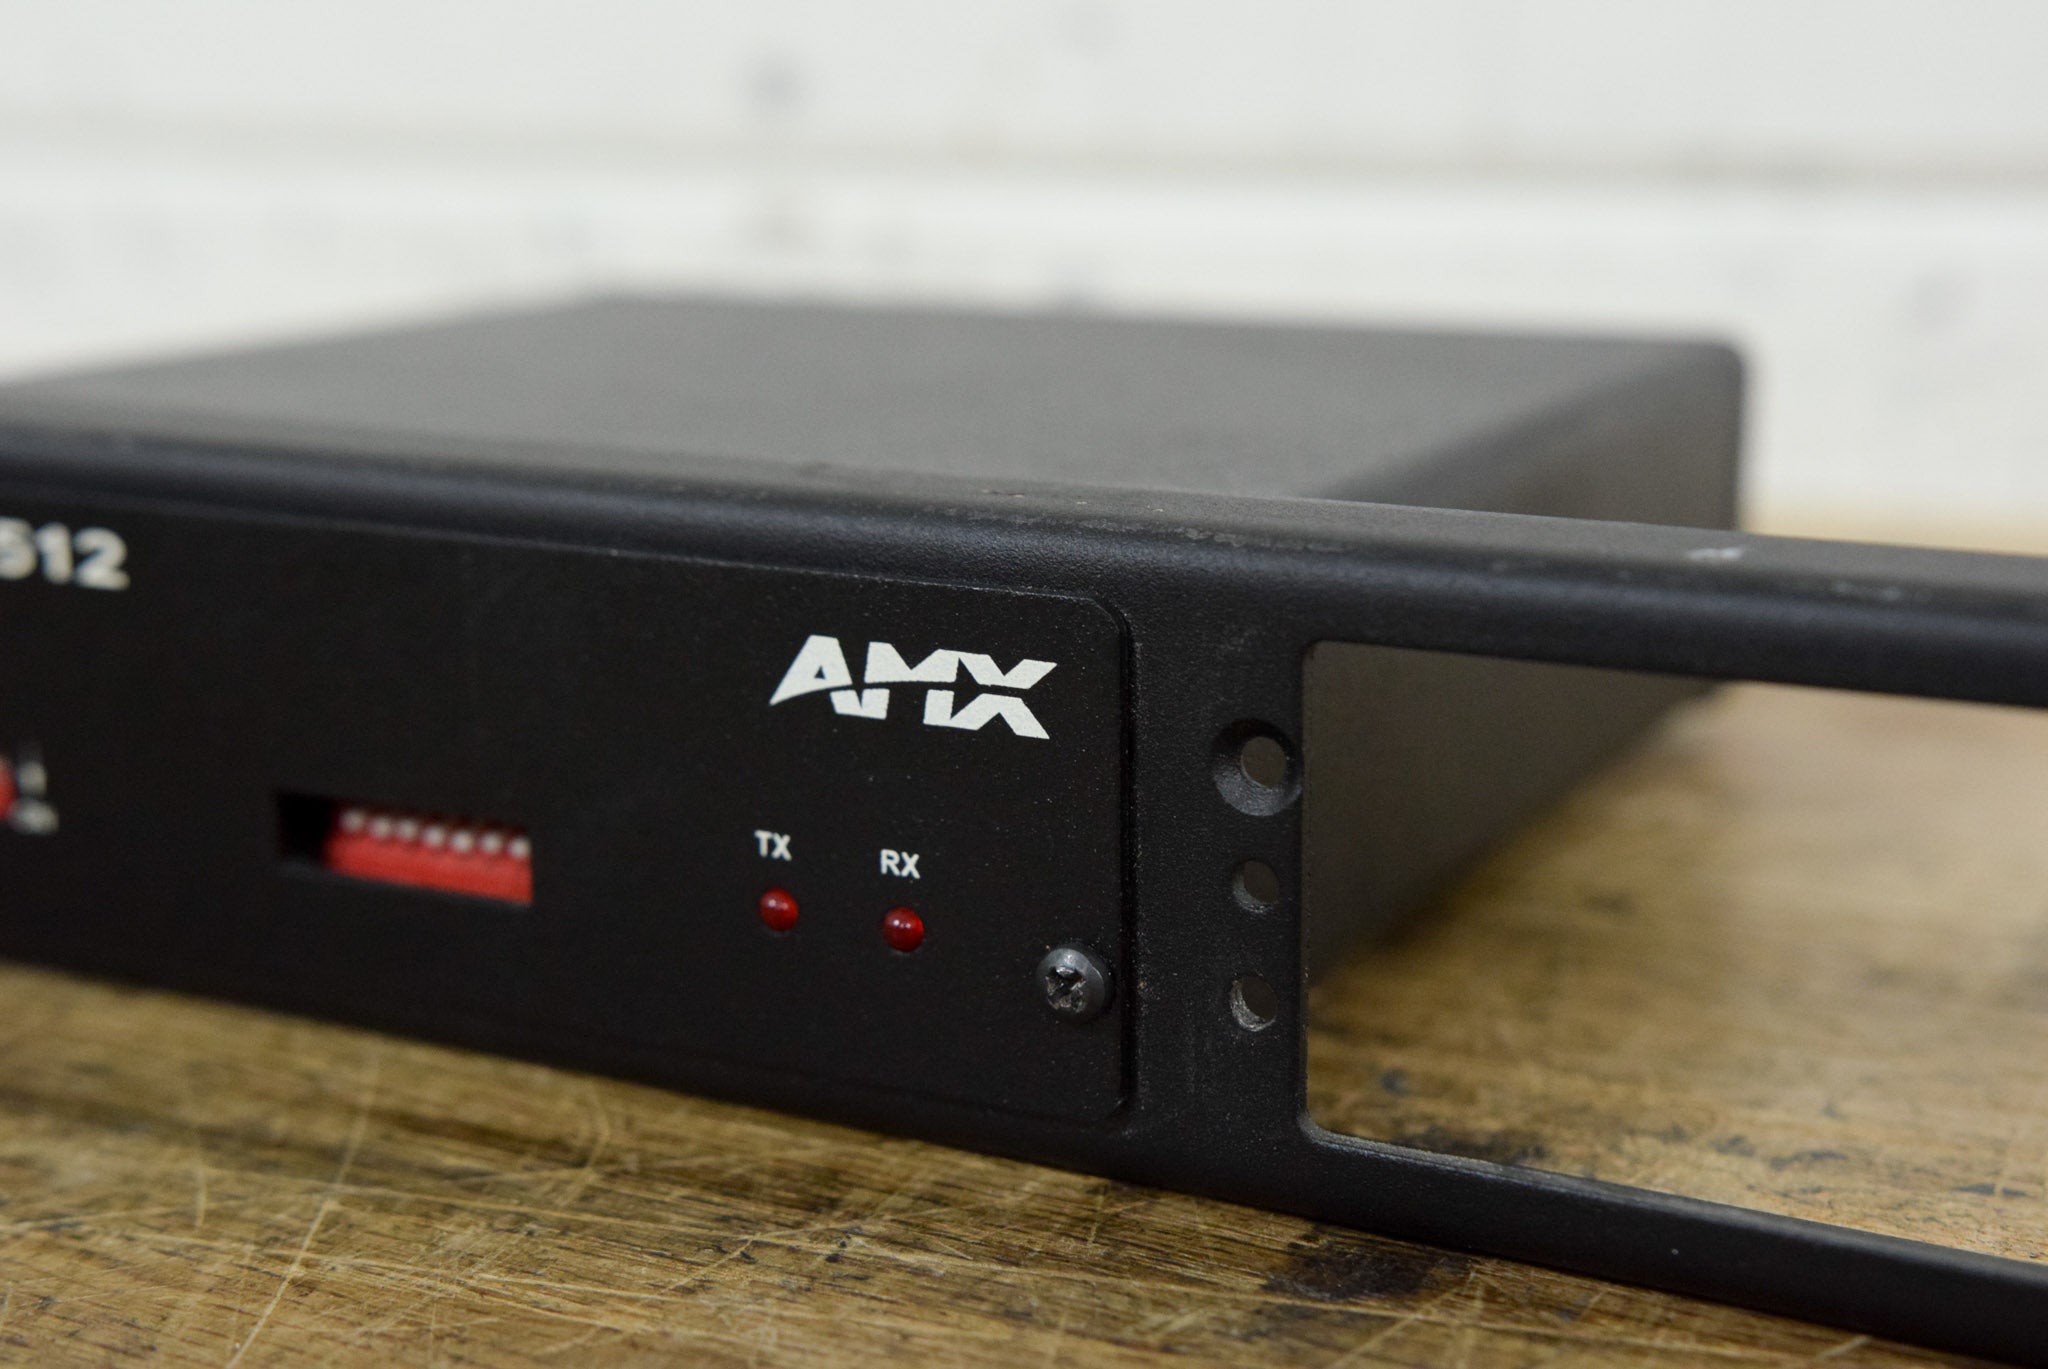 AMX AXB-DMX512 DMX512 to AXLink Interface